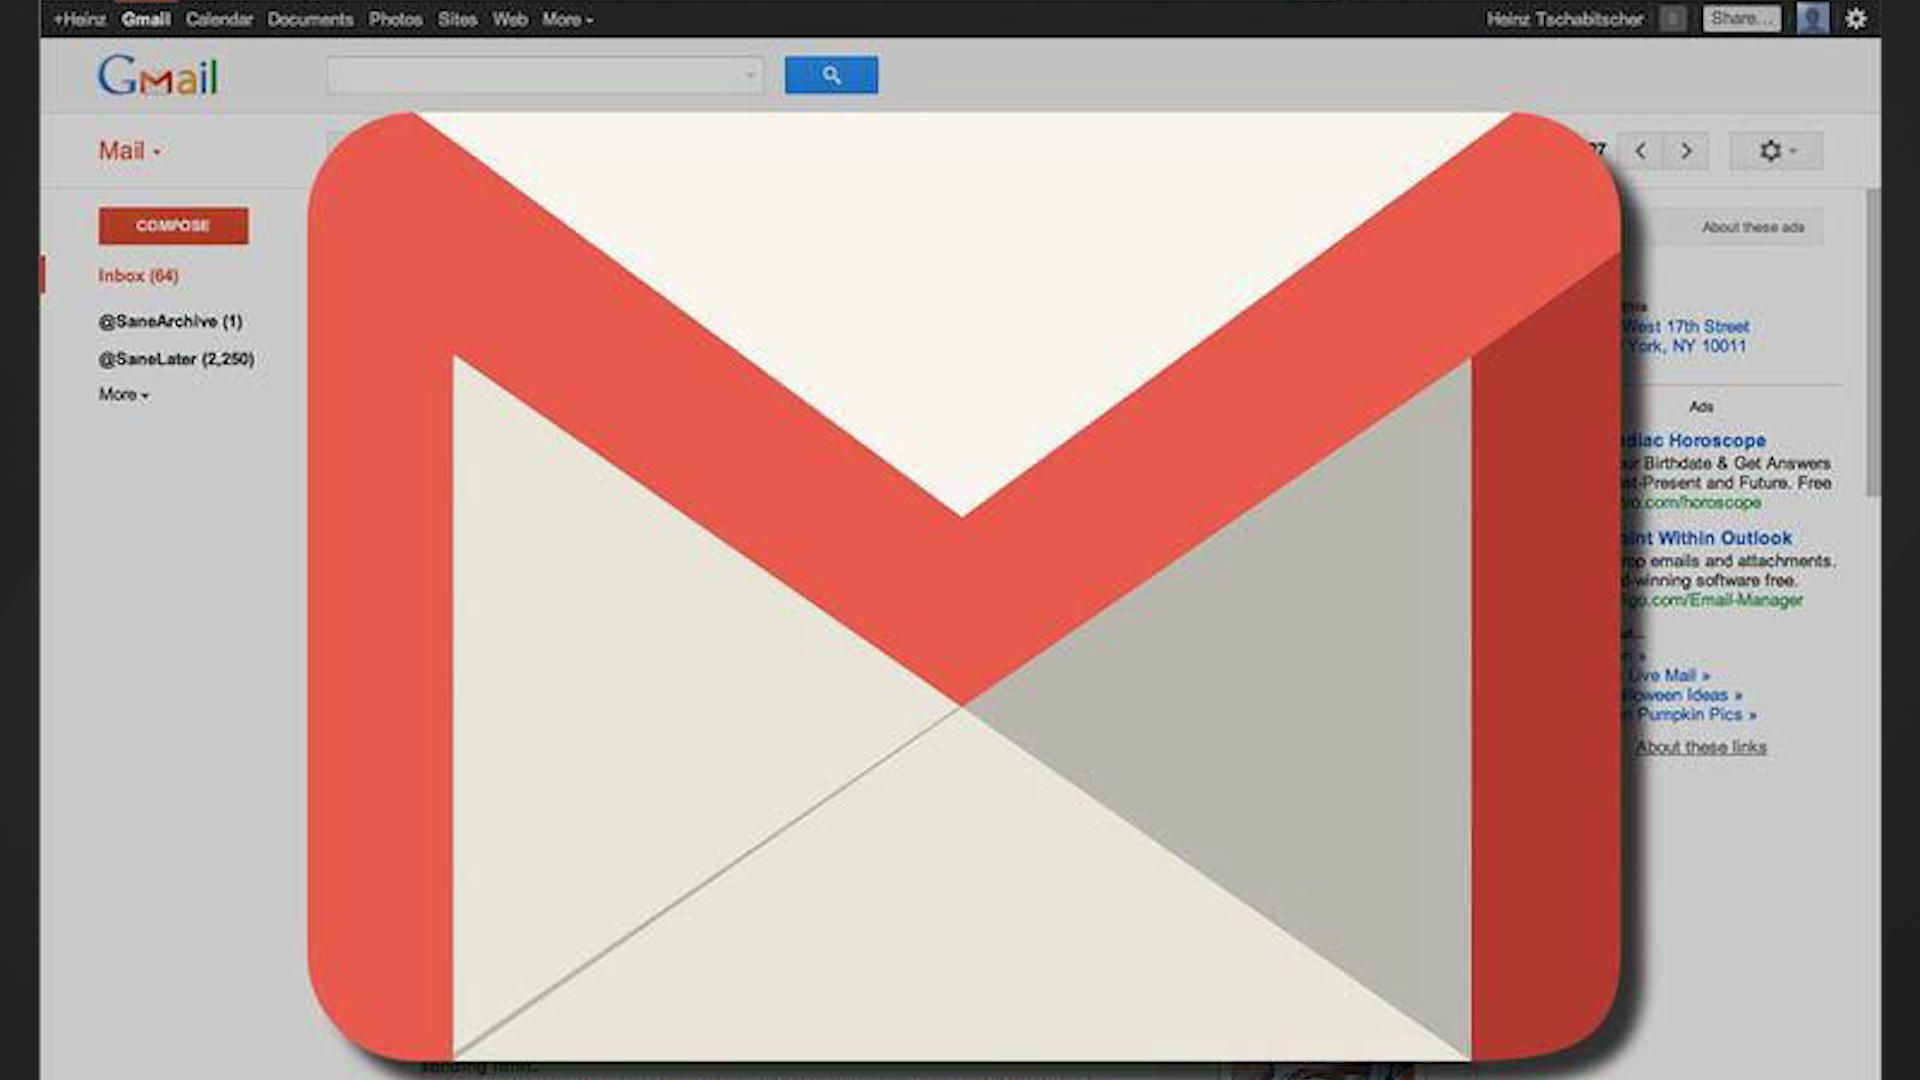 Gmail agora te permite desagrupar conversas no iOS e Android